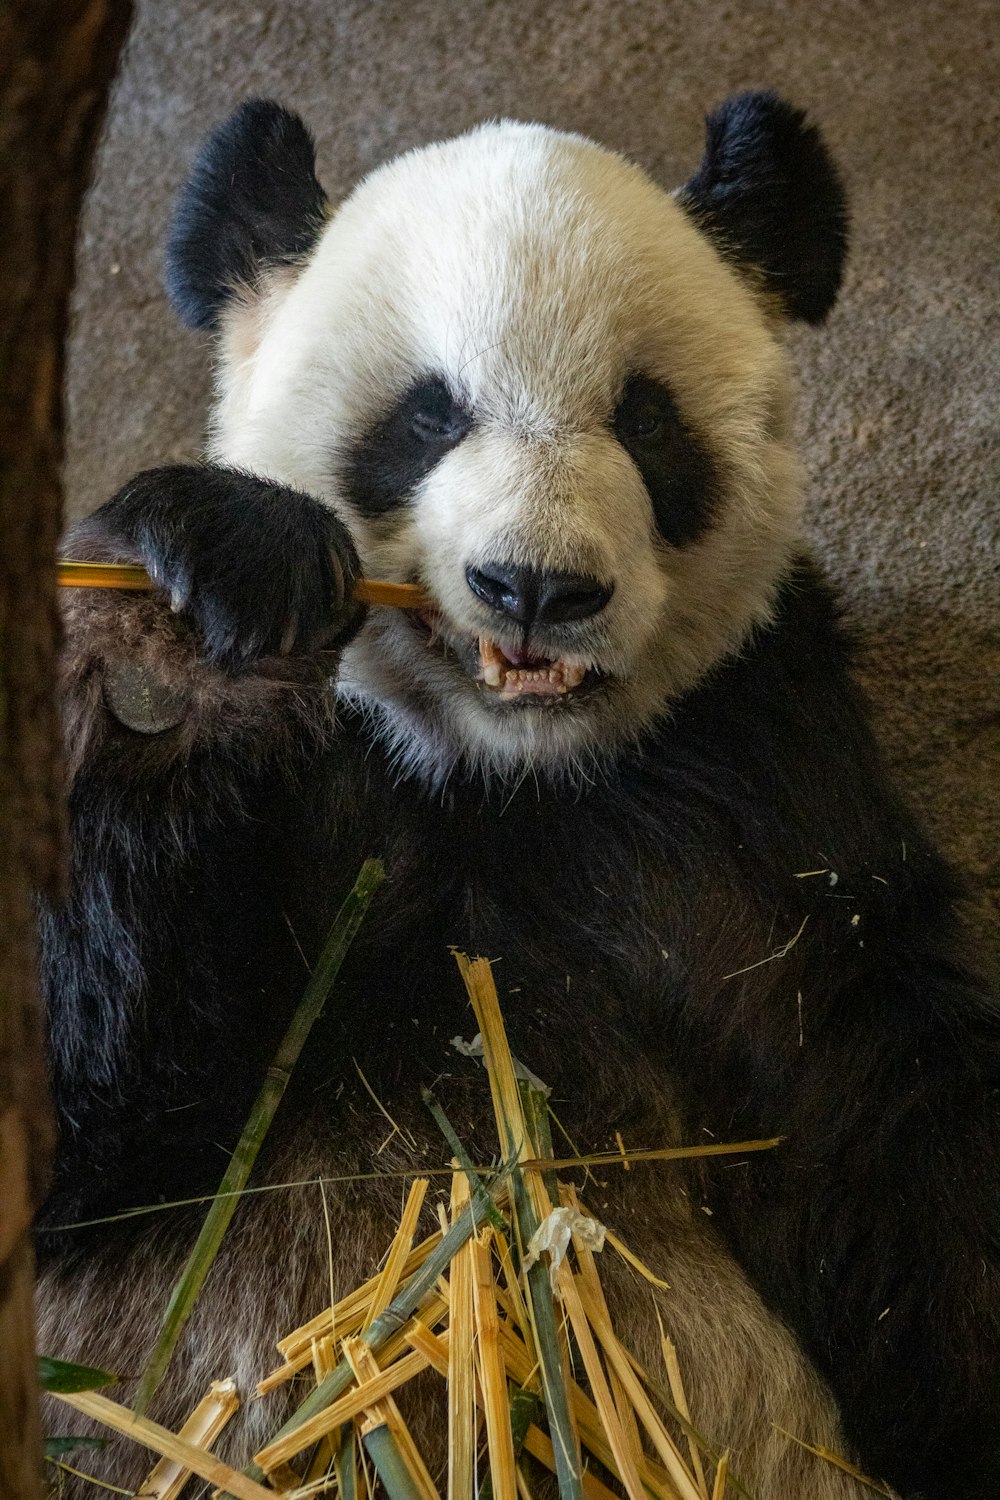 black and white panda bear photo – Free Memphis Image on Unsplash